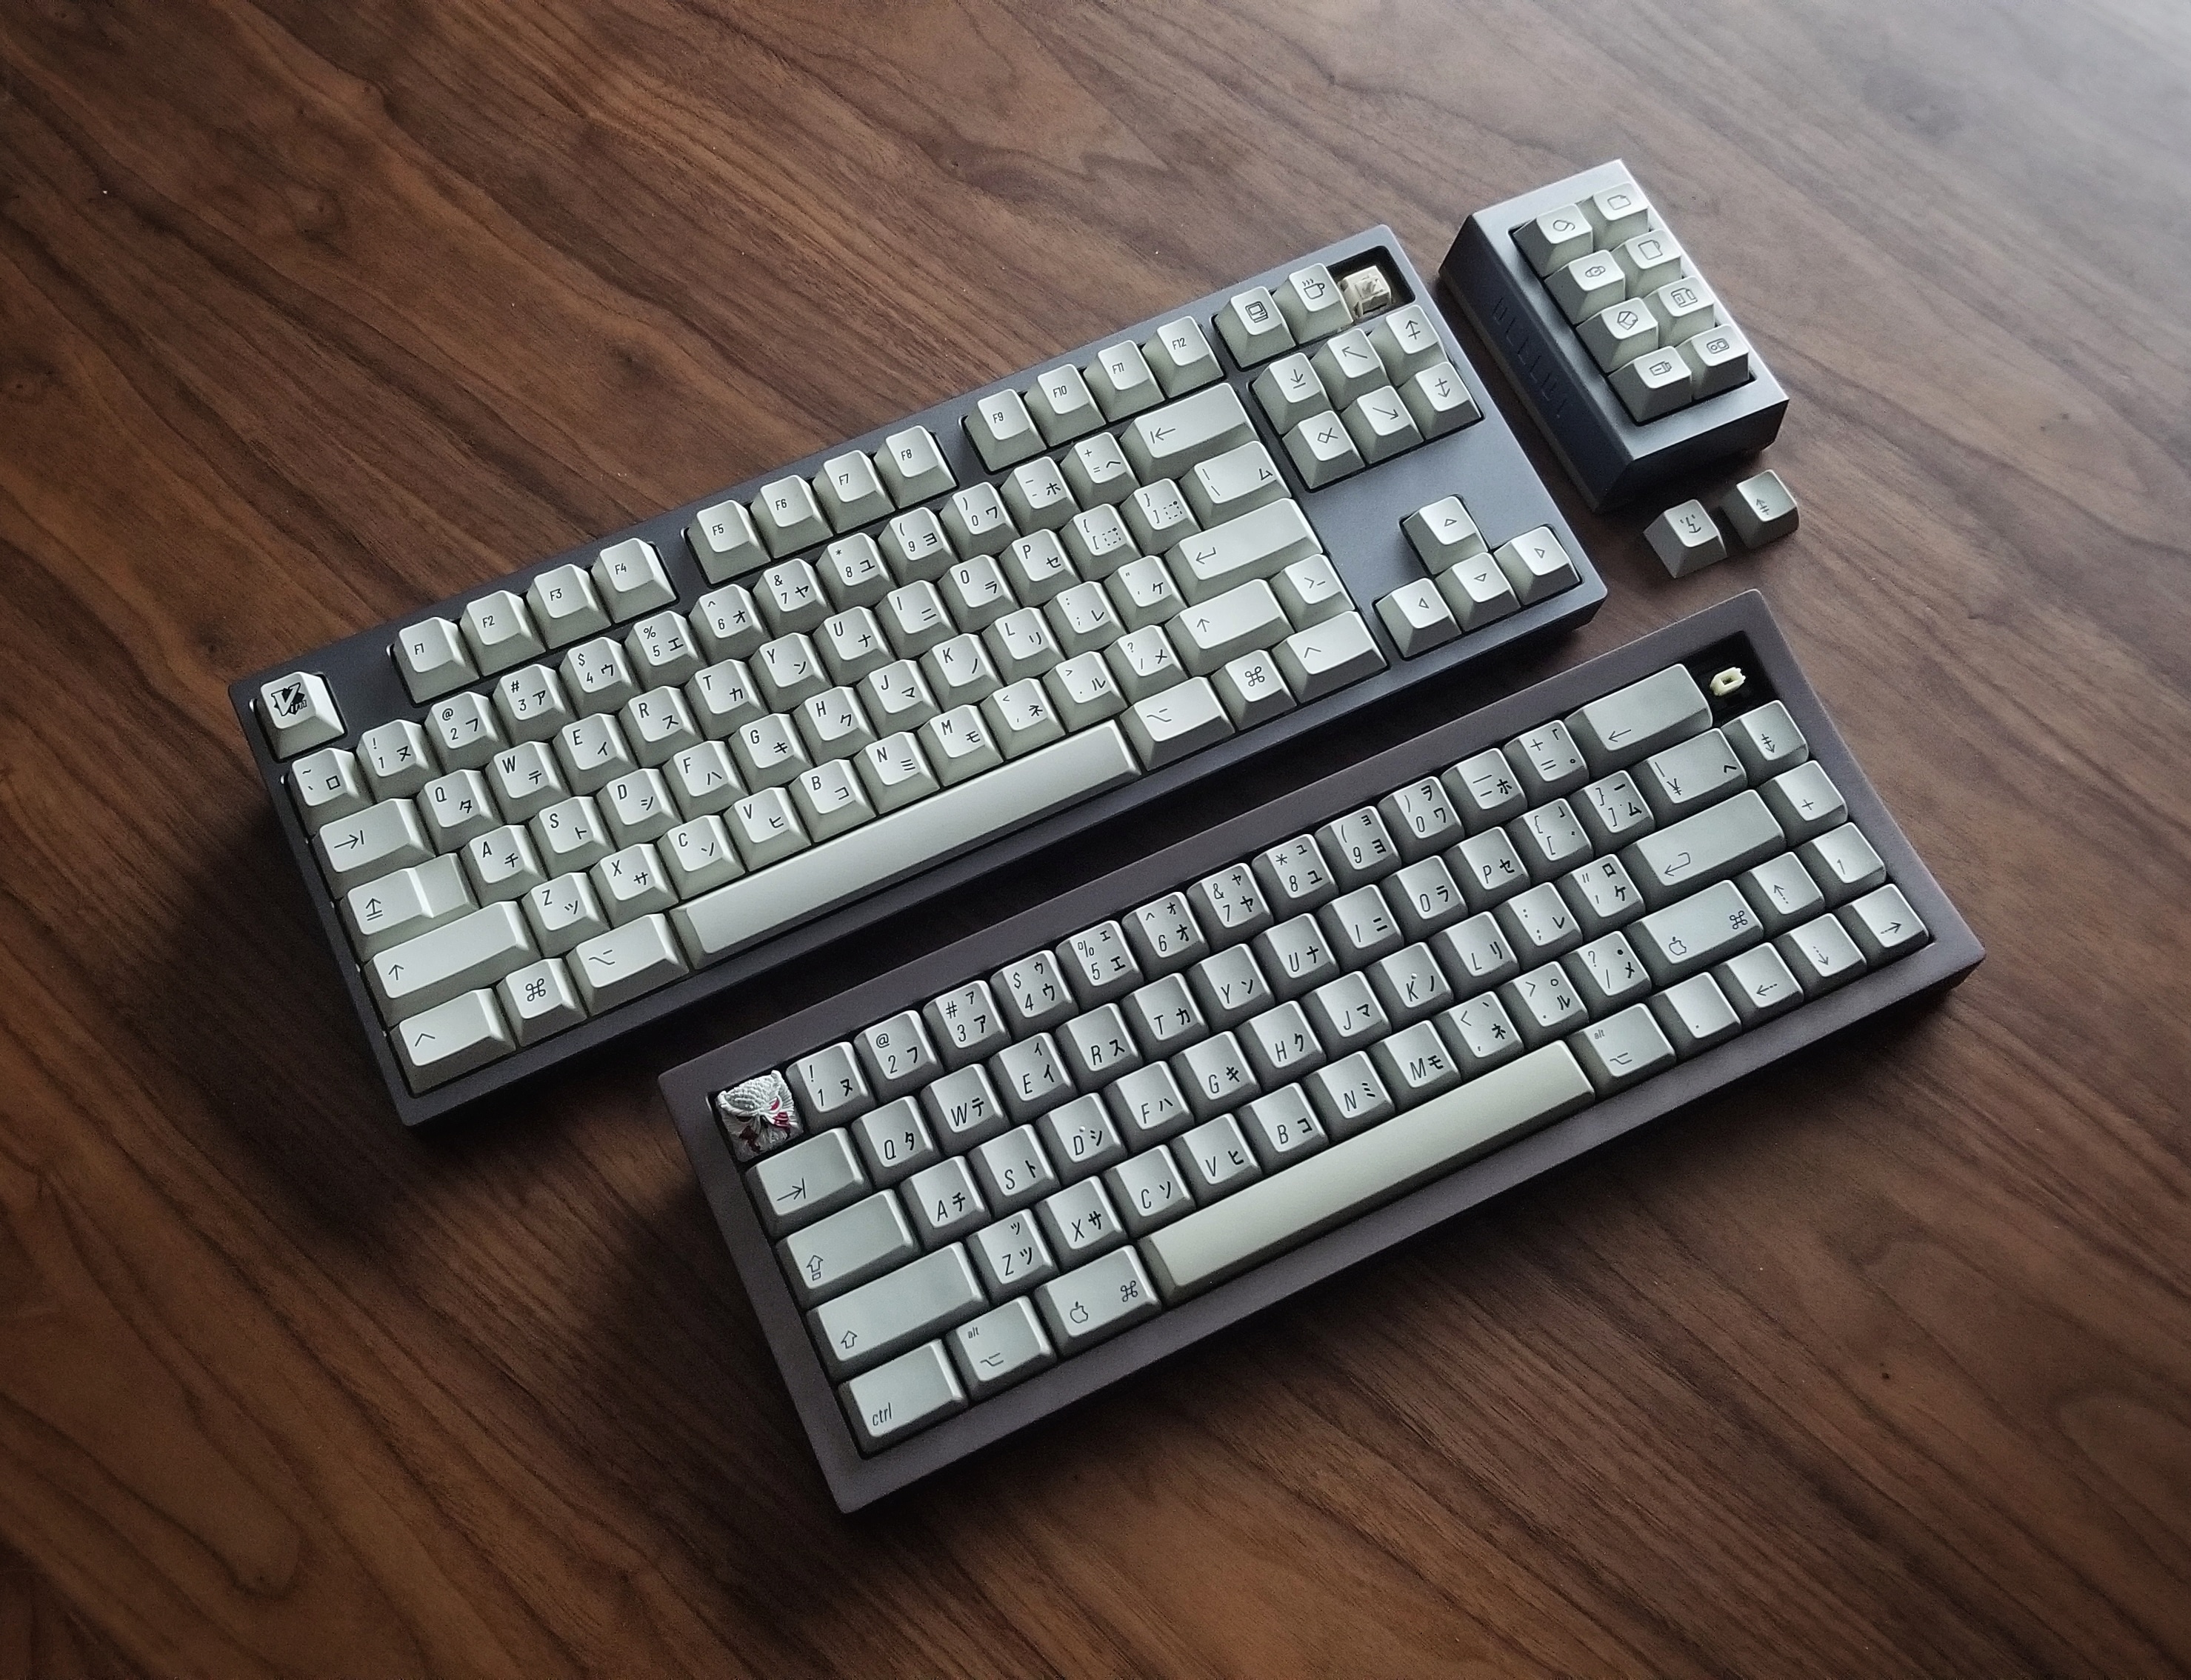 GitHub - skarrmann/umbra: 24 key ergonomic keyboard with self-encasing PCB.